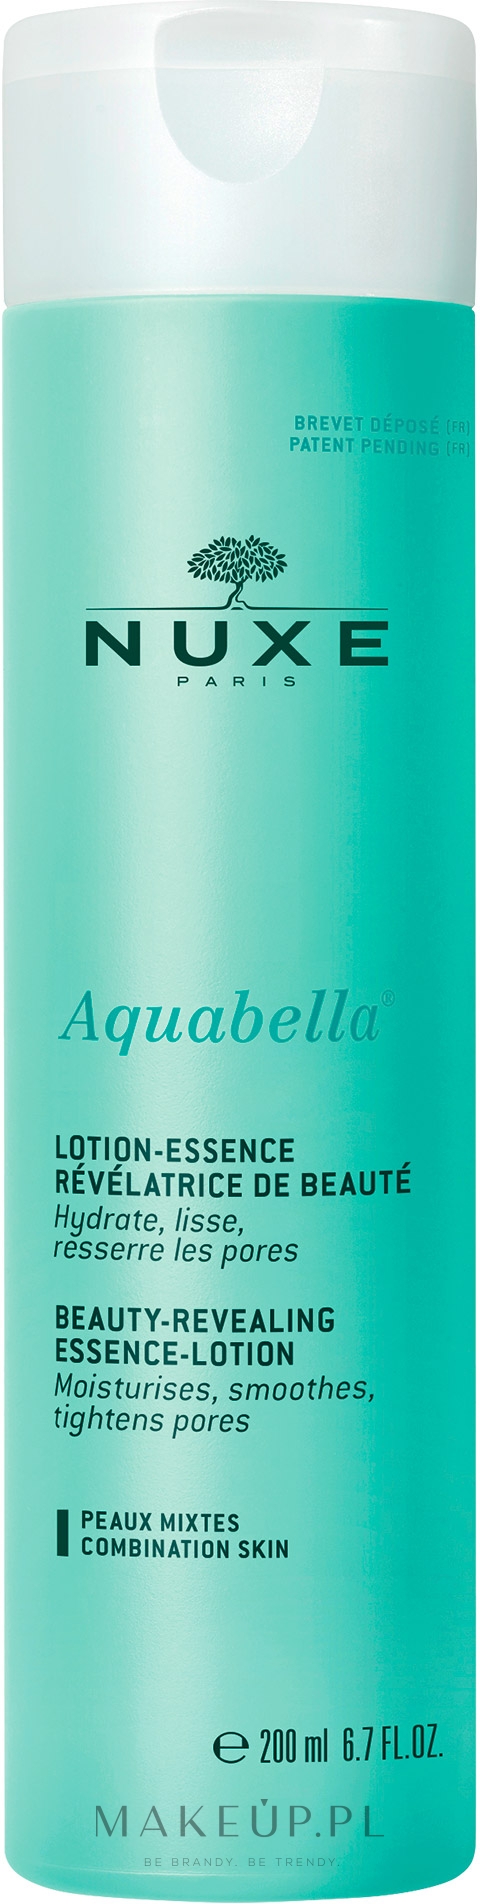 Tonik-esencja - Nuxe Aquabella Beauty-Revealing Essence-Lotion — Zdjęcie 200 ml